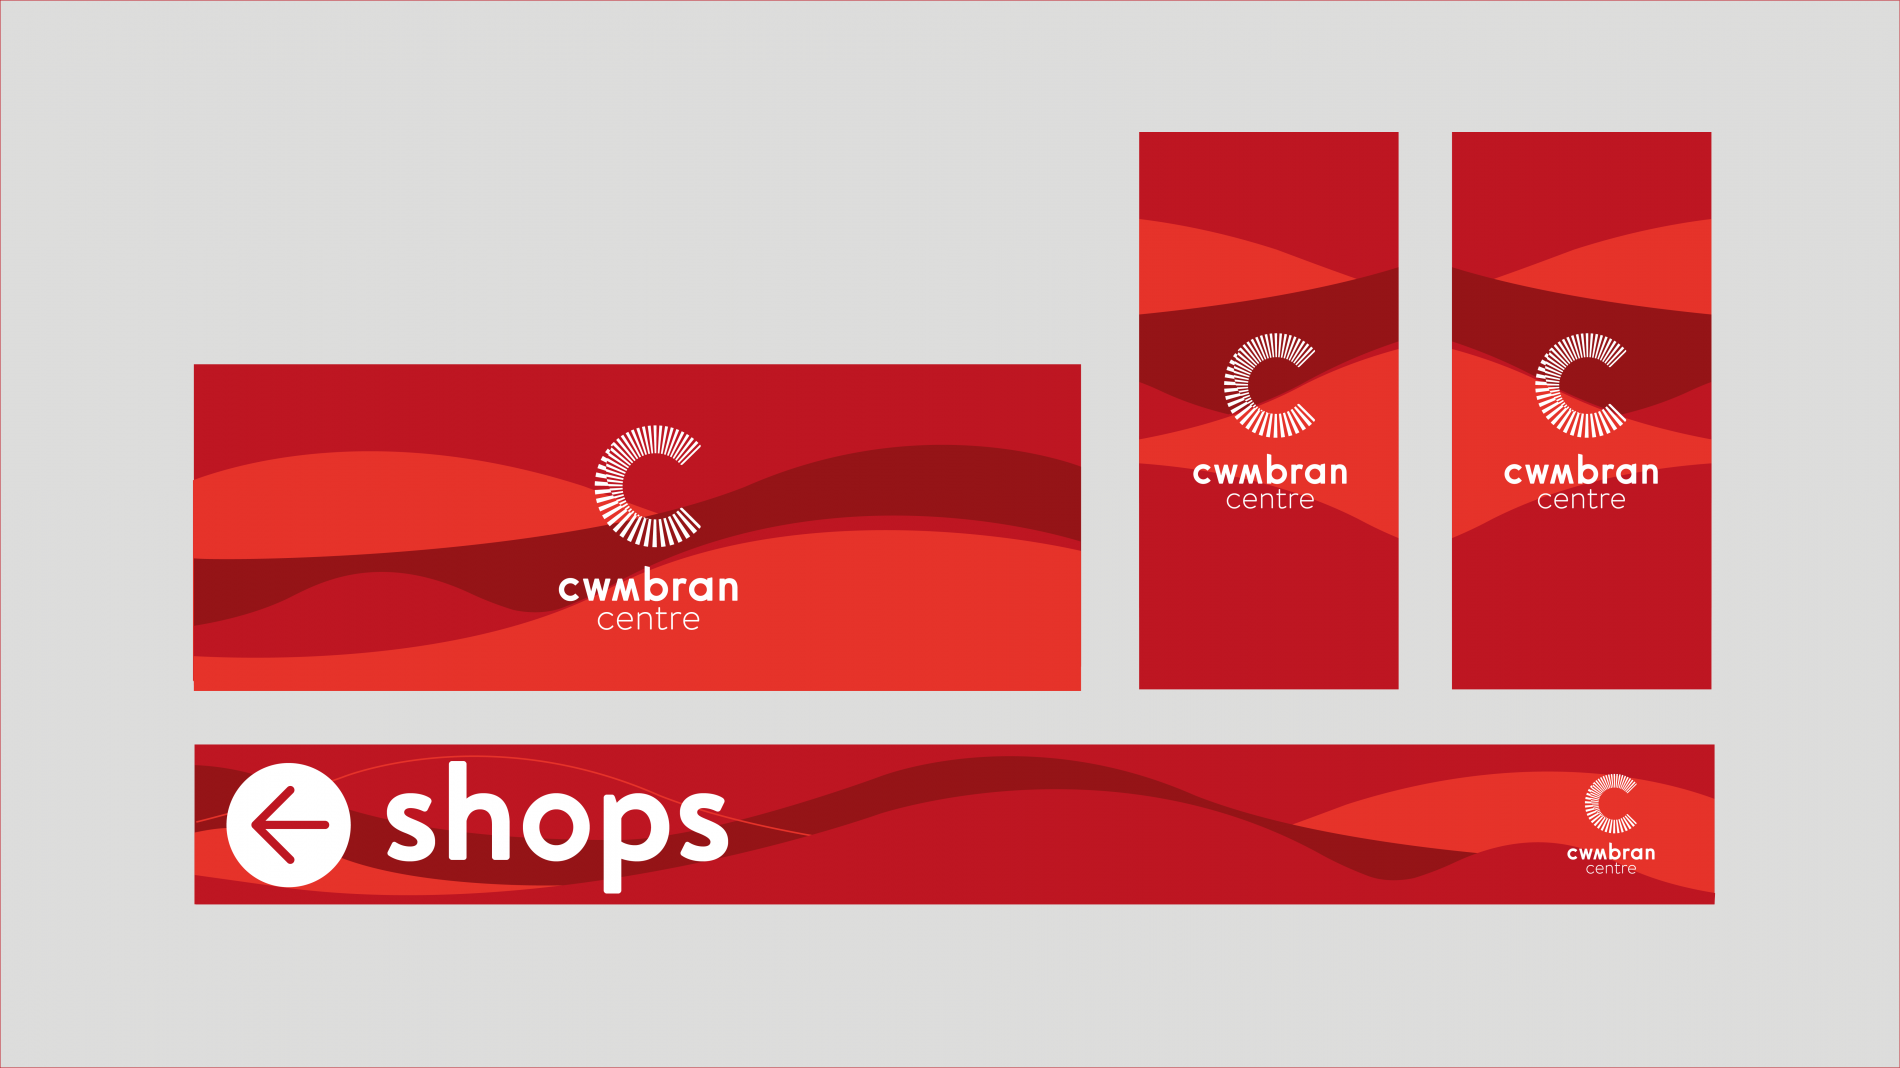 Cwmbran graphic design signage